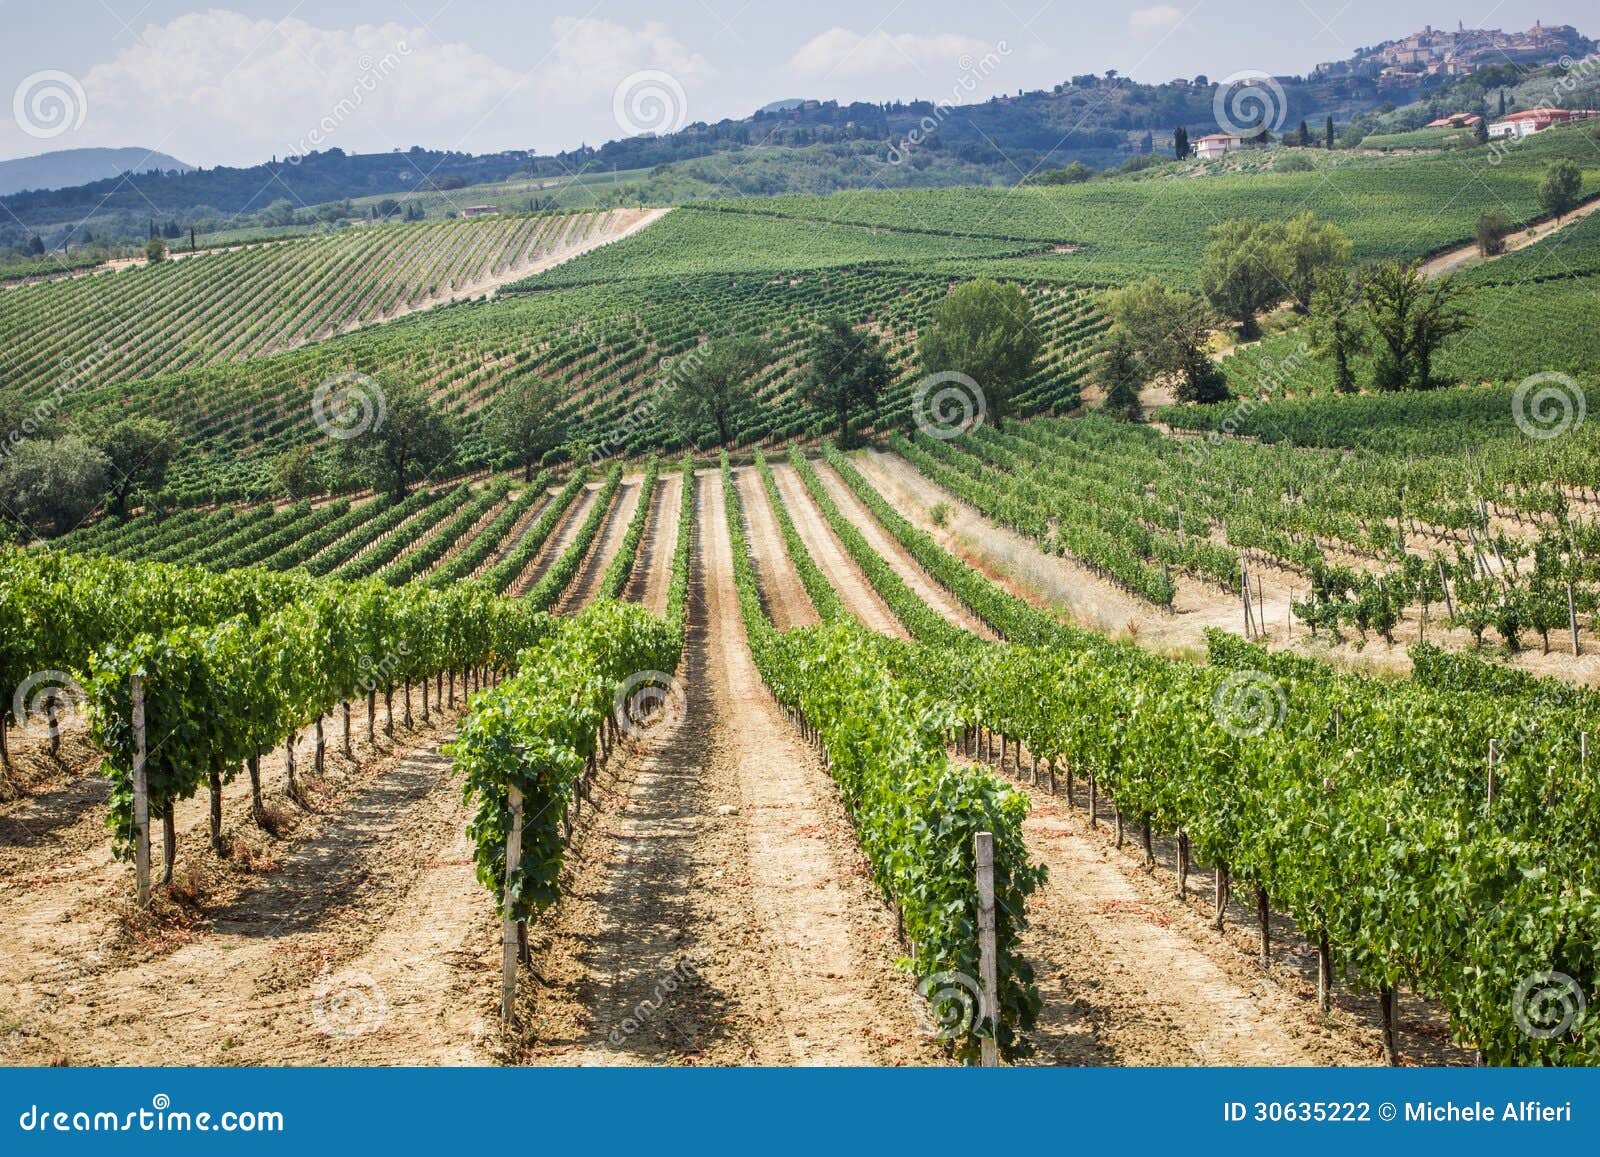 vineyard in the area of Ã¢â¬â¹Ã¢â¬â¹production of vino nobile, montepulciano, italy